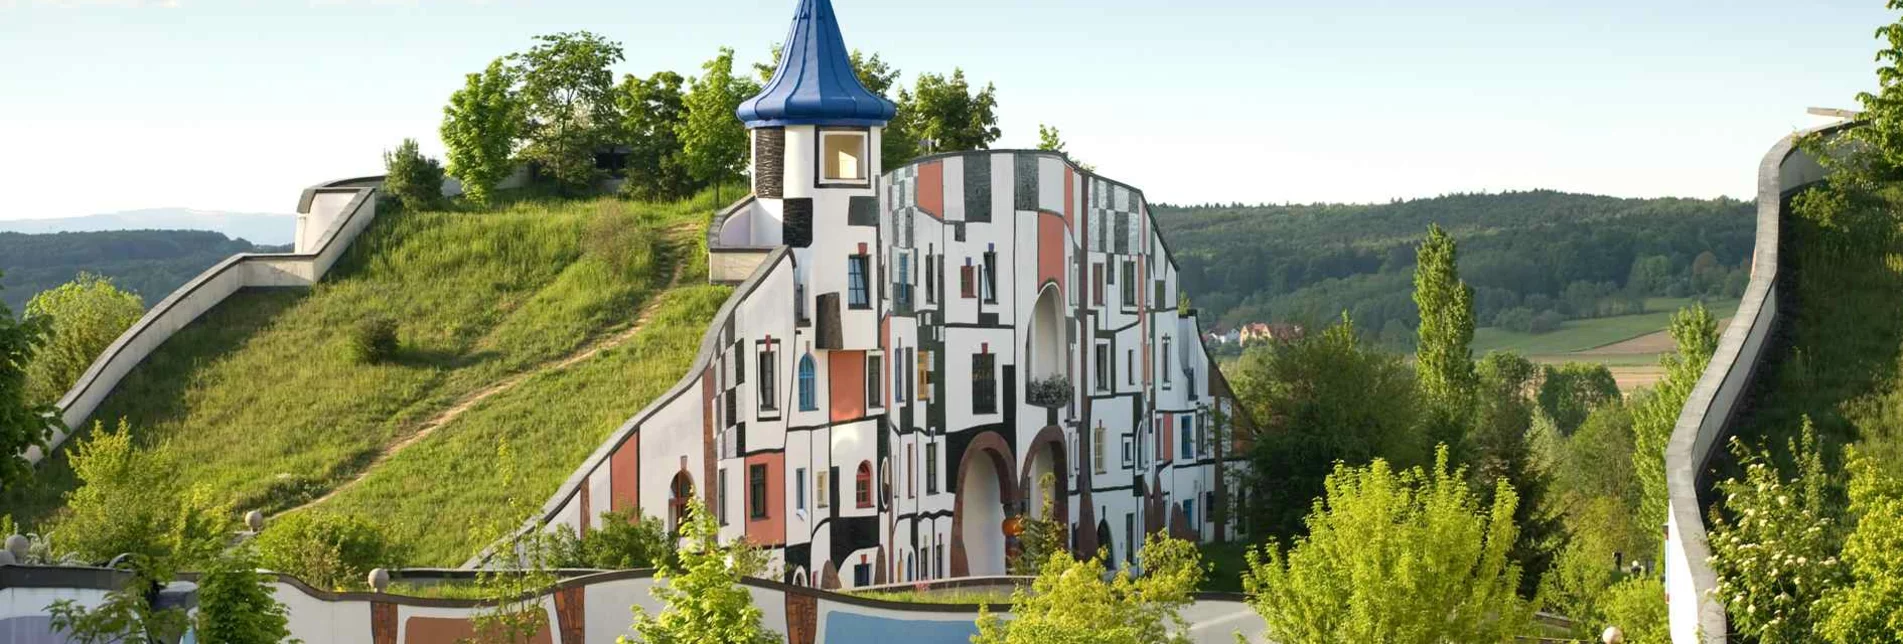 Hundertwasser Architekturprojekt | © Rogner Bad Blumau 